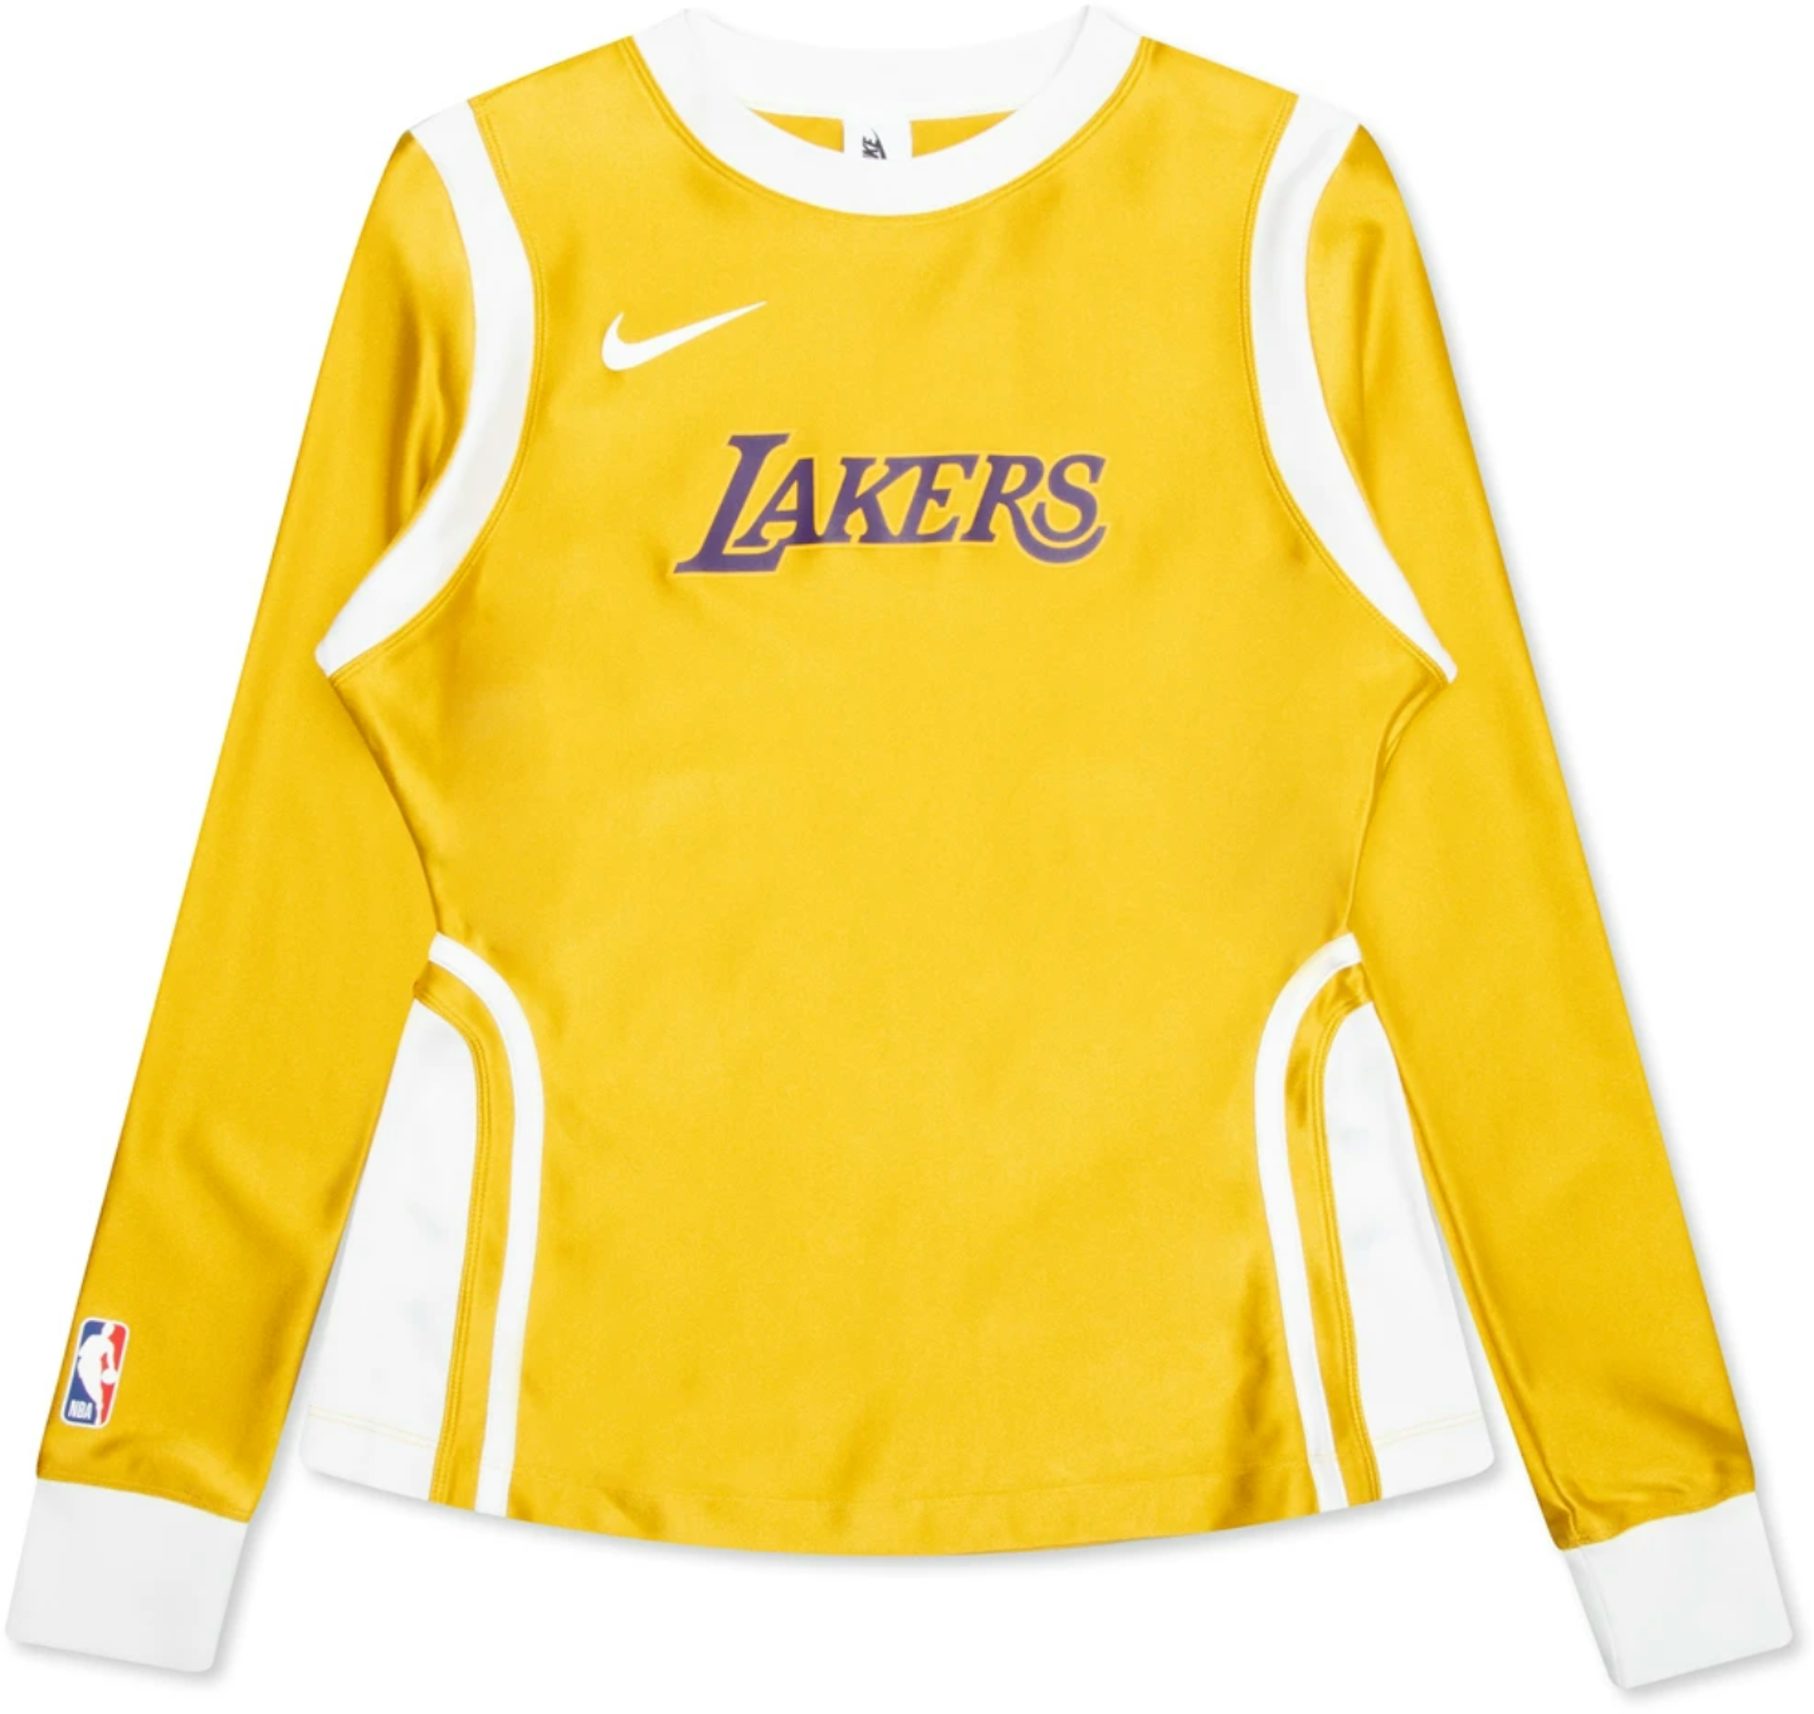 Nike x Ambush NBA Collection Lakers Shirt Gold/White/Purple - FW20